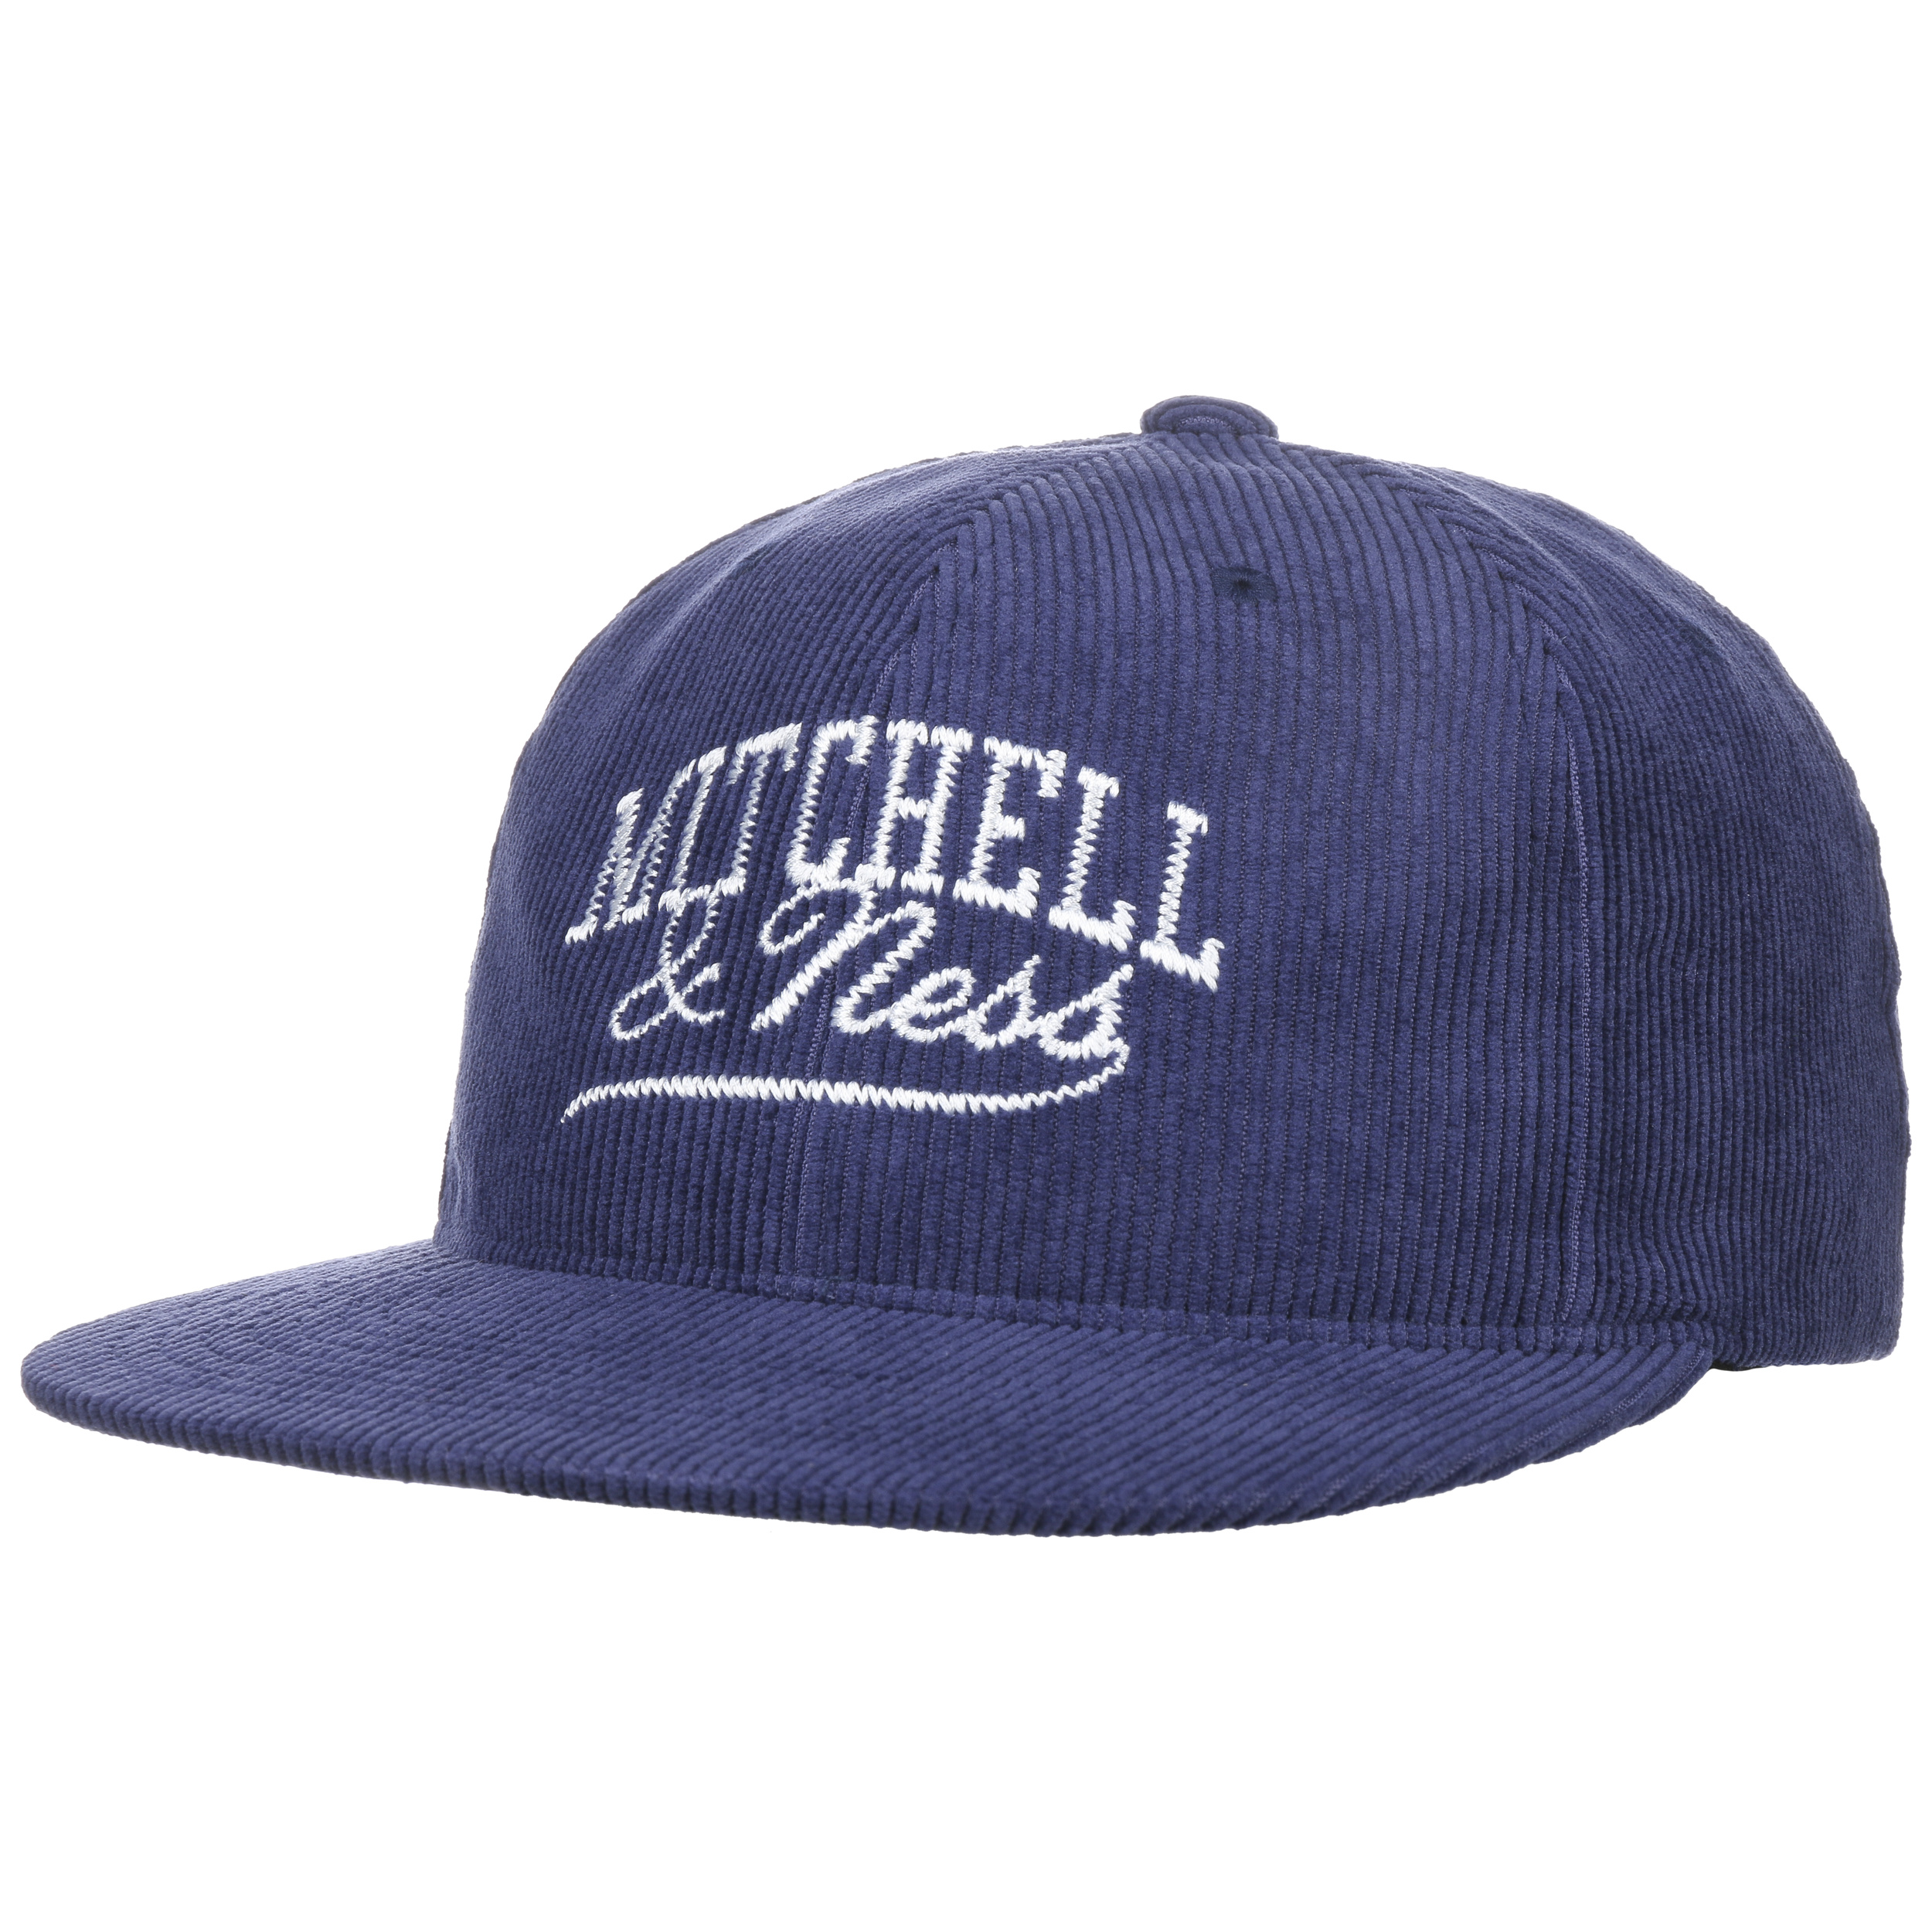 mitchell and ness baseball cap